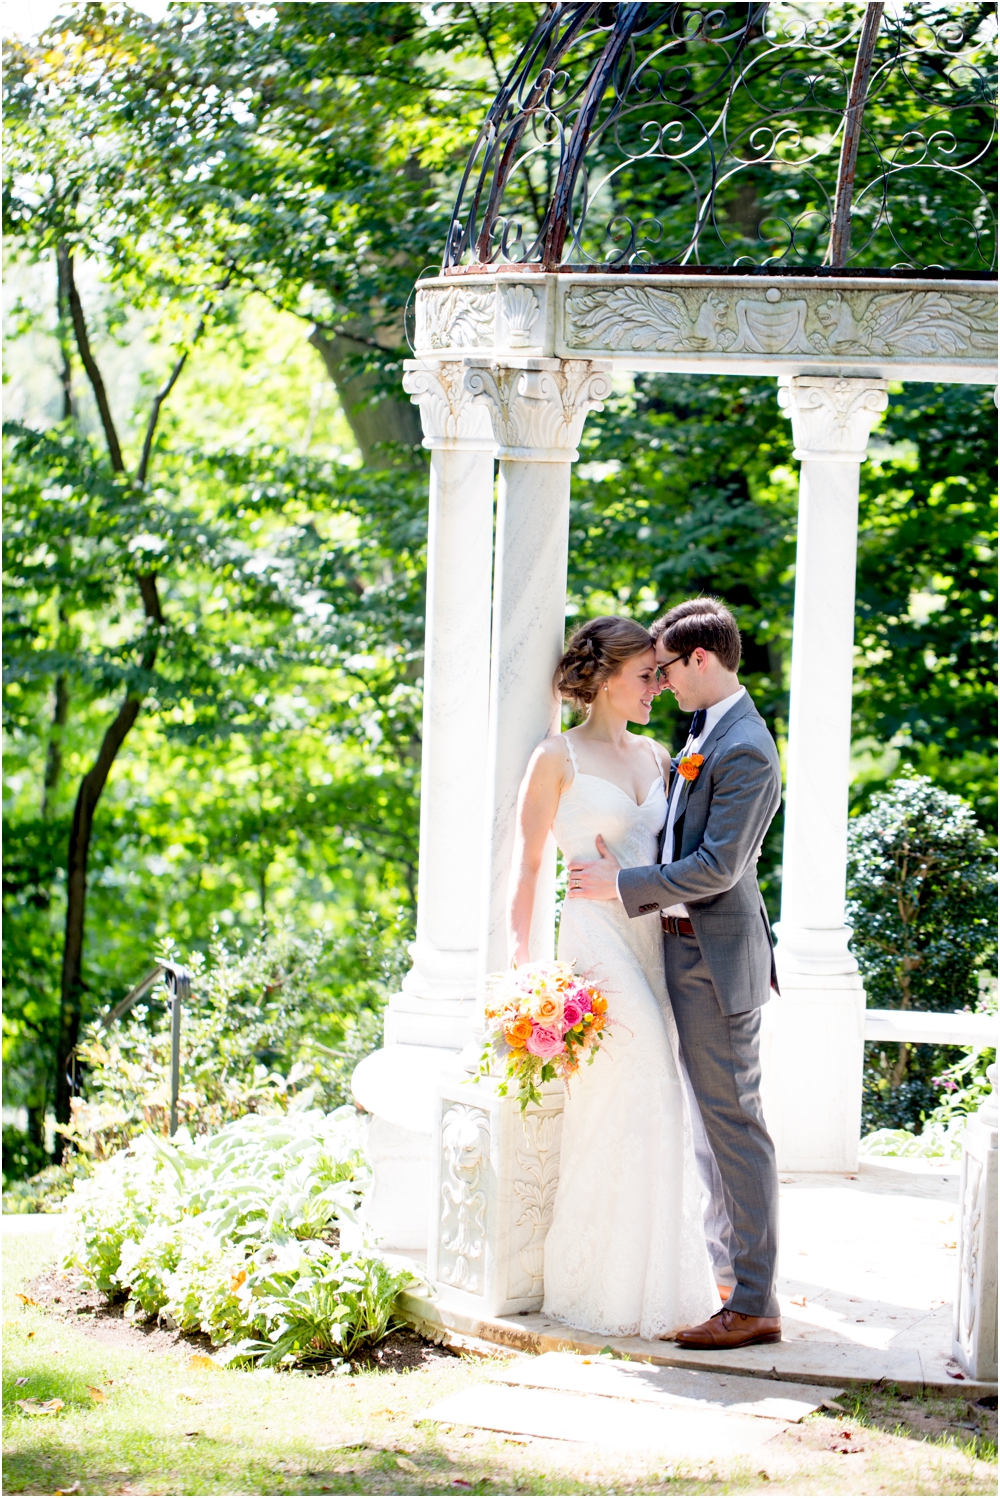 daniel chrissy gramercy mansion outdoor garden wedding living radiant photography_0111.jpg